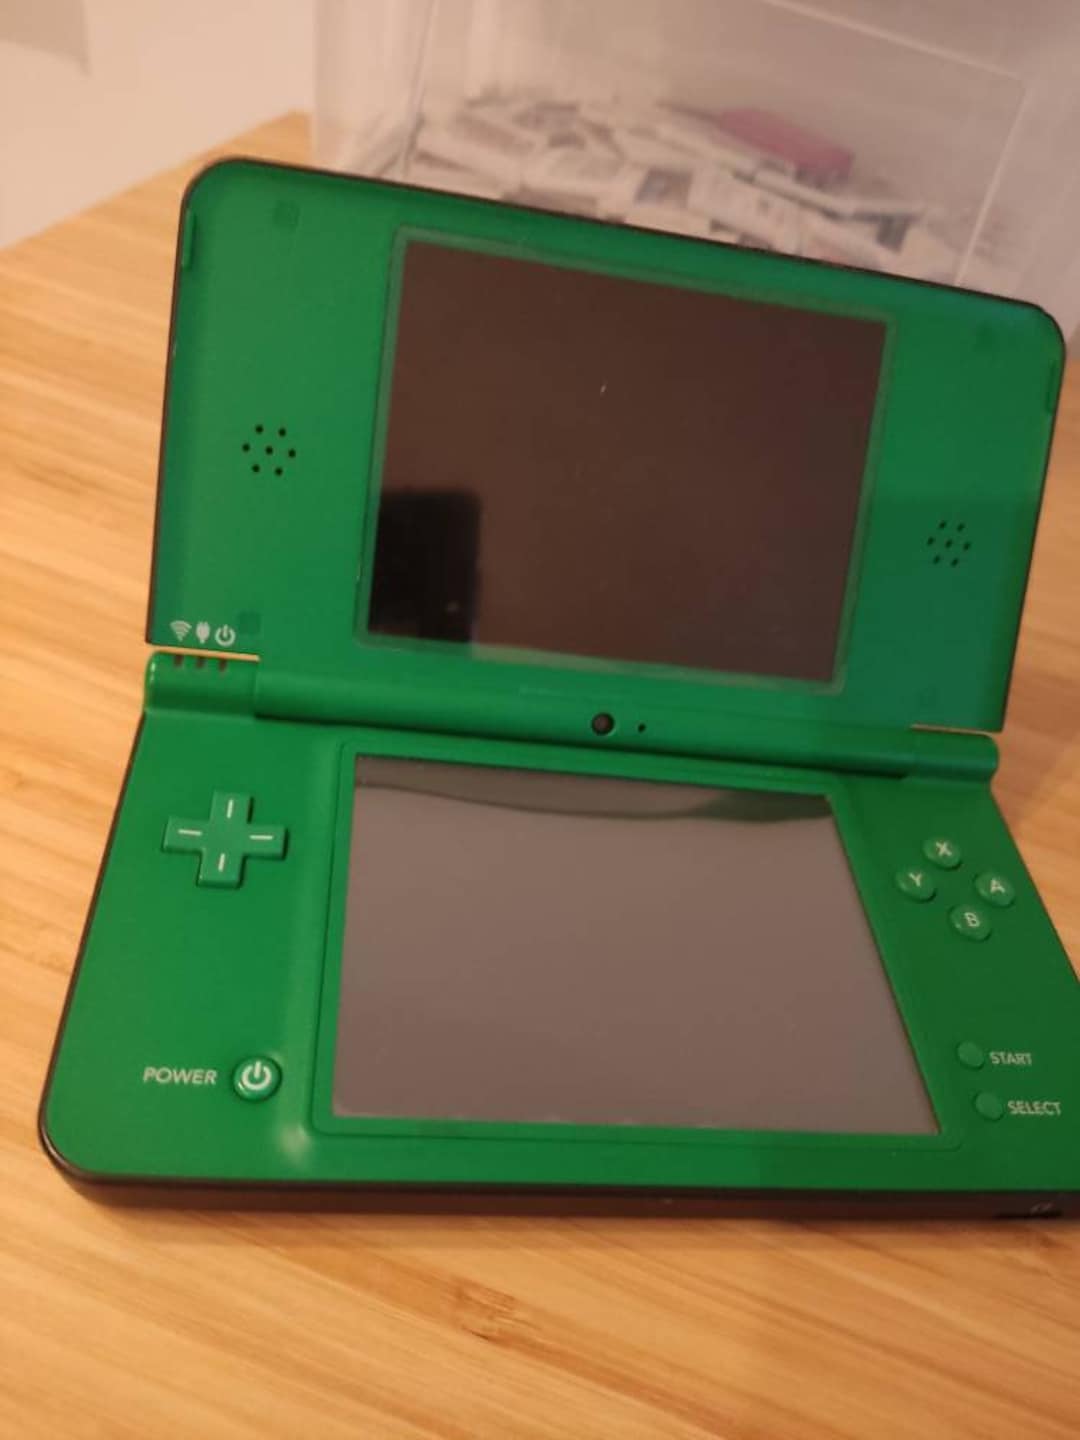 Modded Nintendo Dsi Xl Green Edition With 5000 Games Original Good